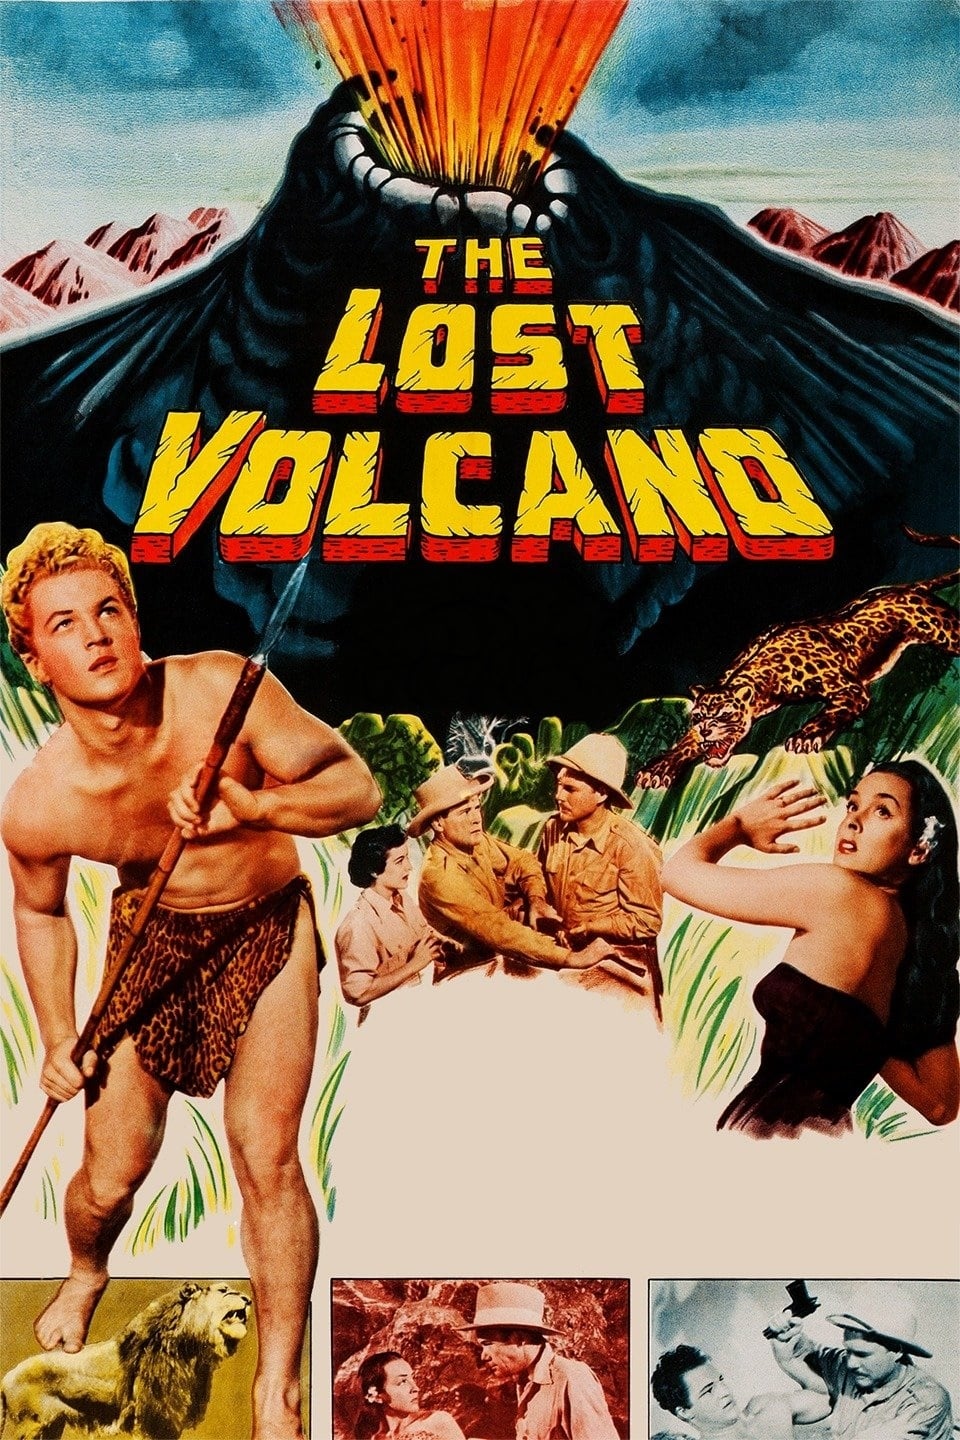 The Lost Volcano